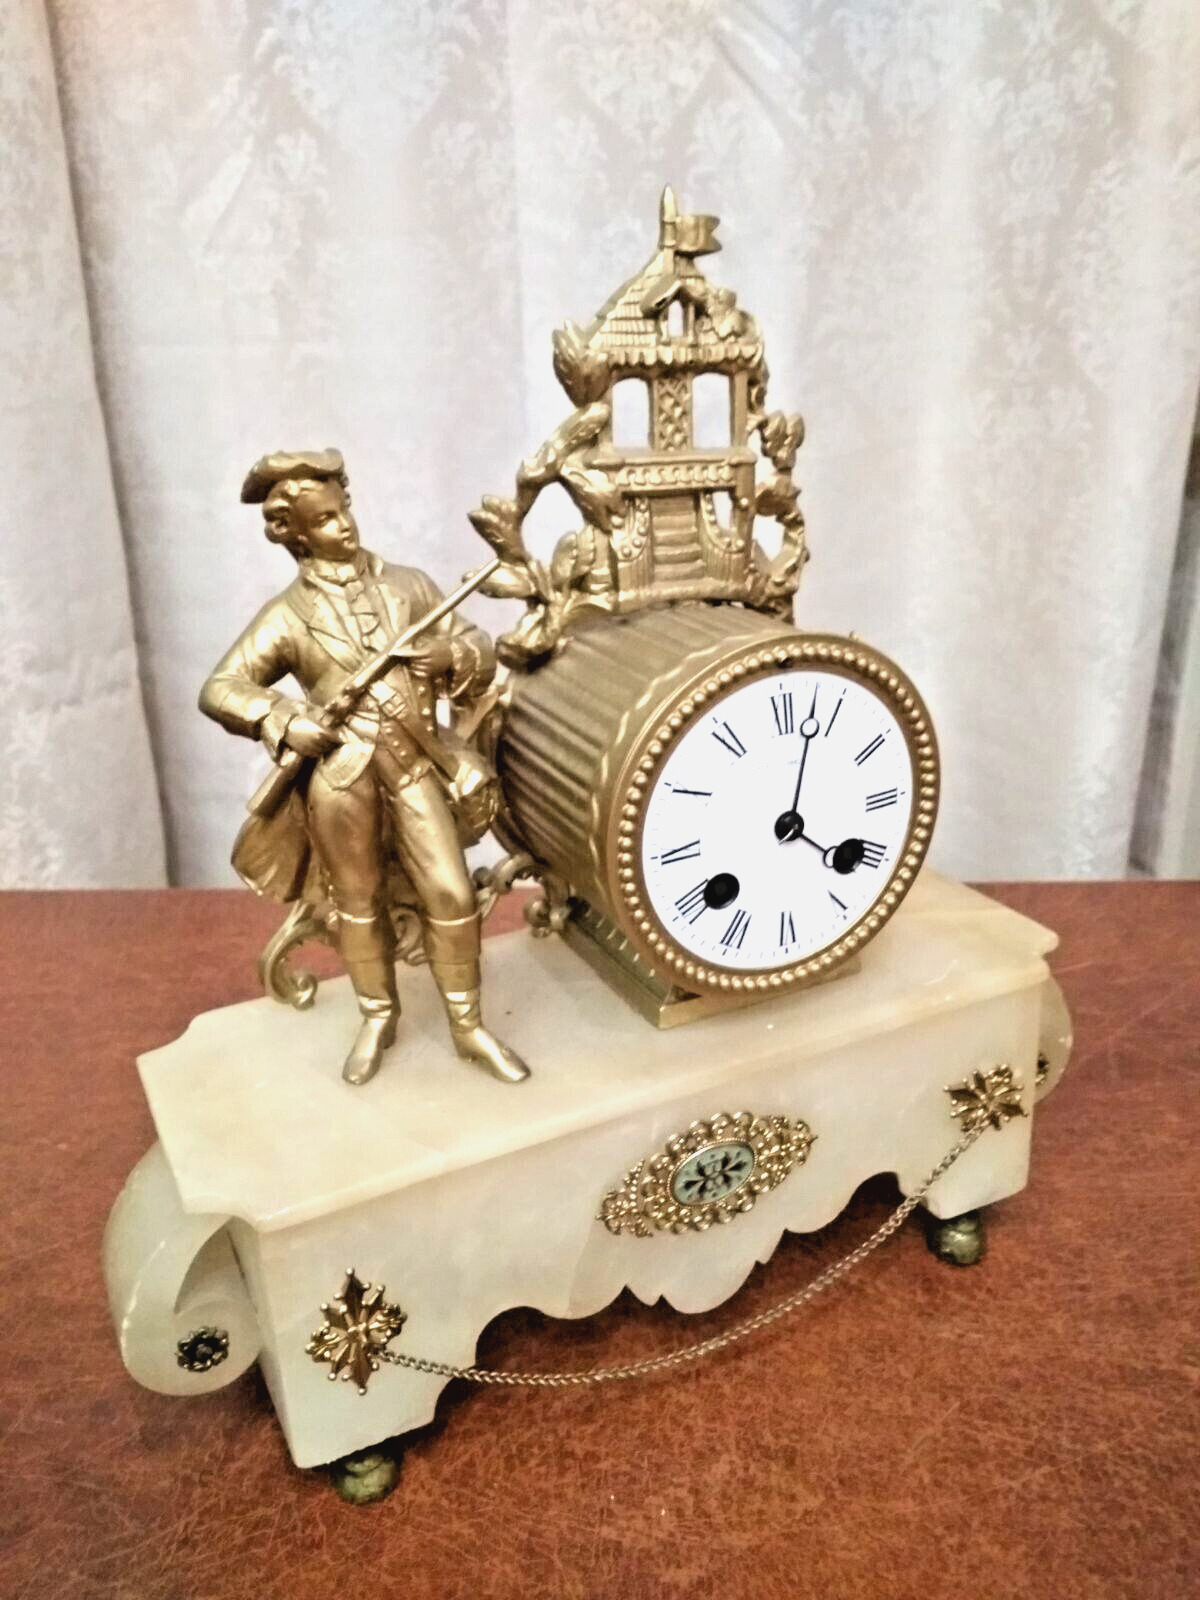 Antique French mantel clock. Original 18th-19th century